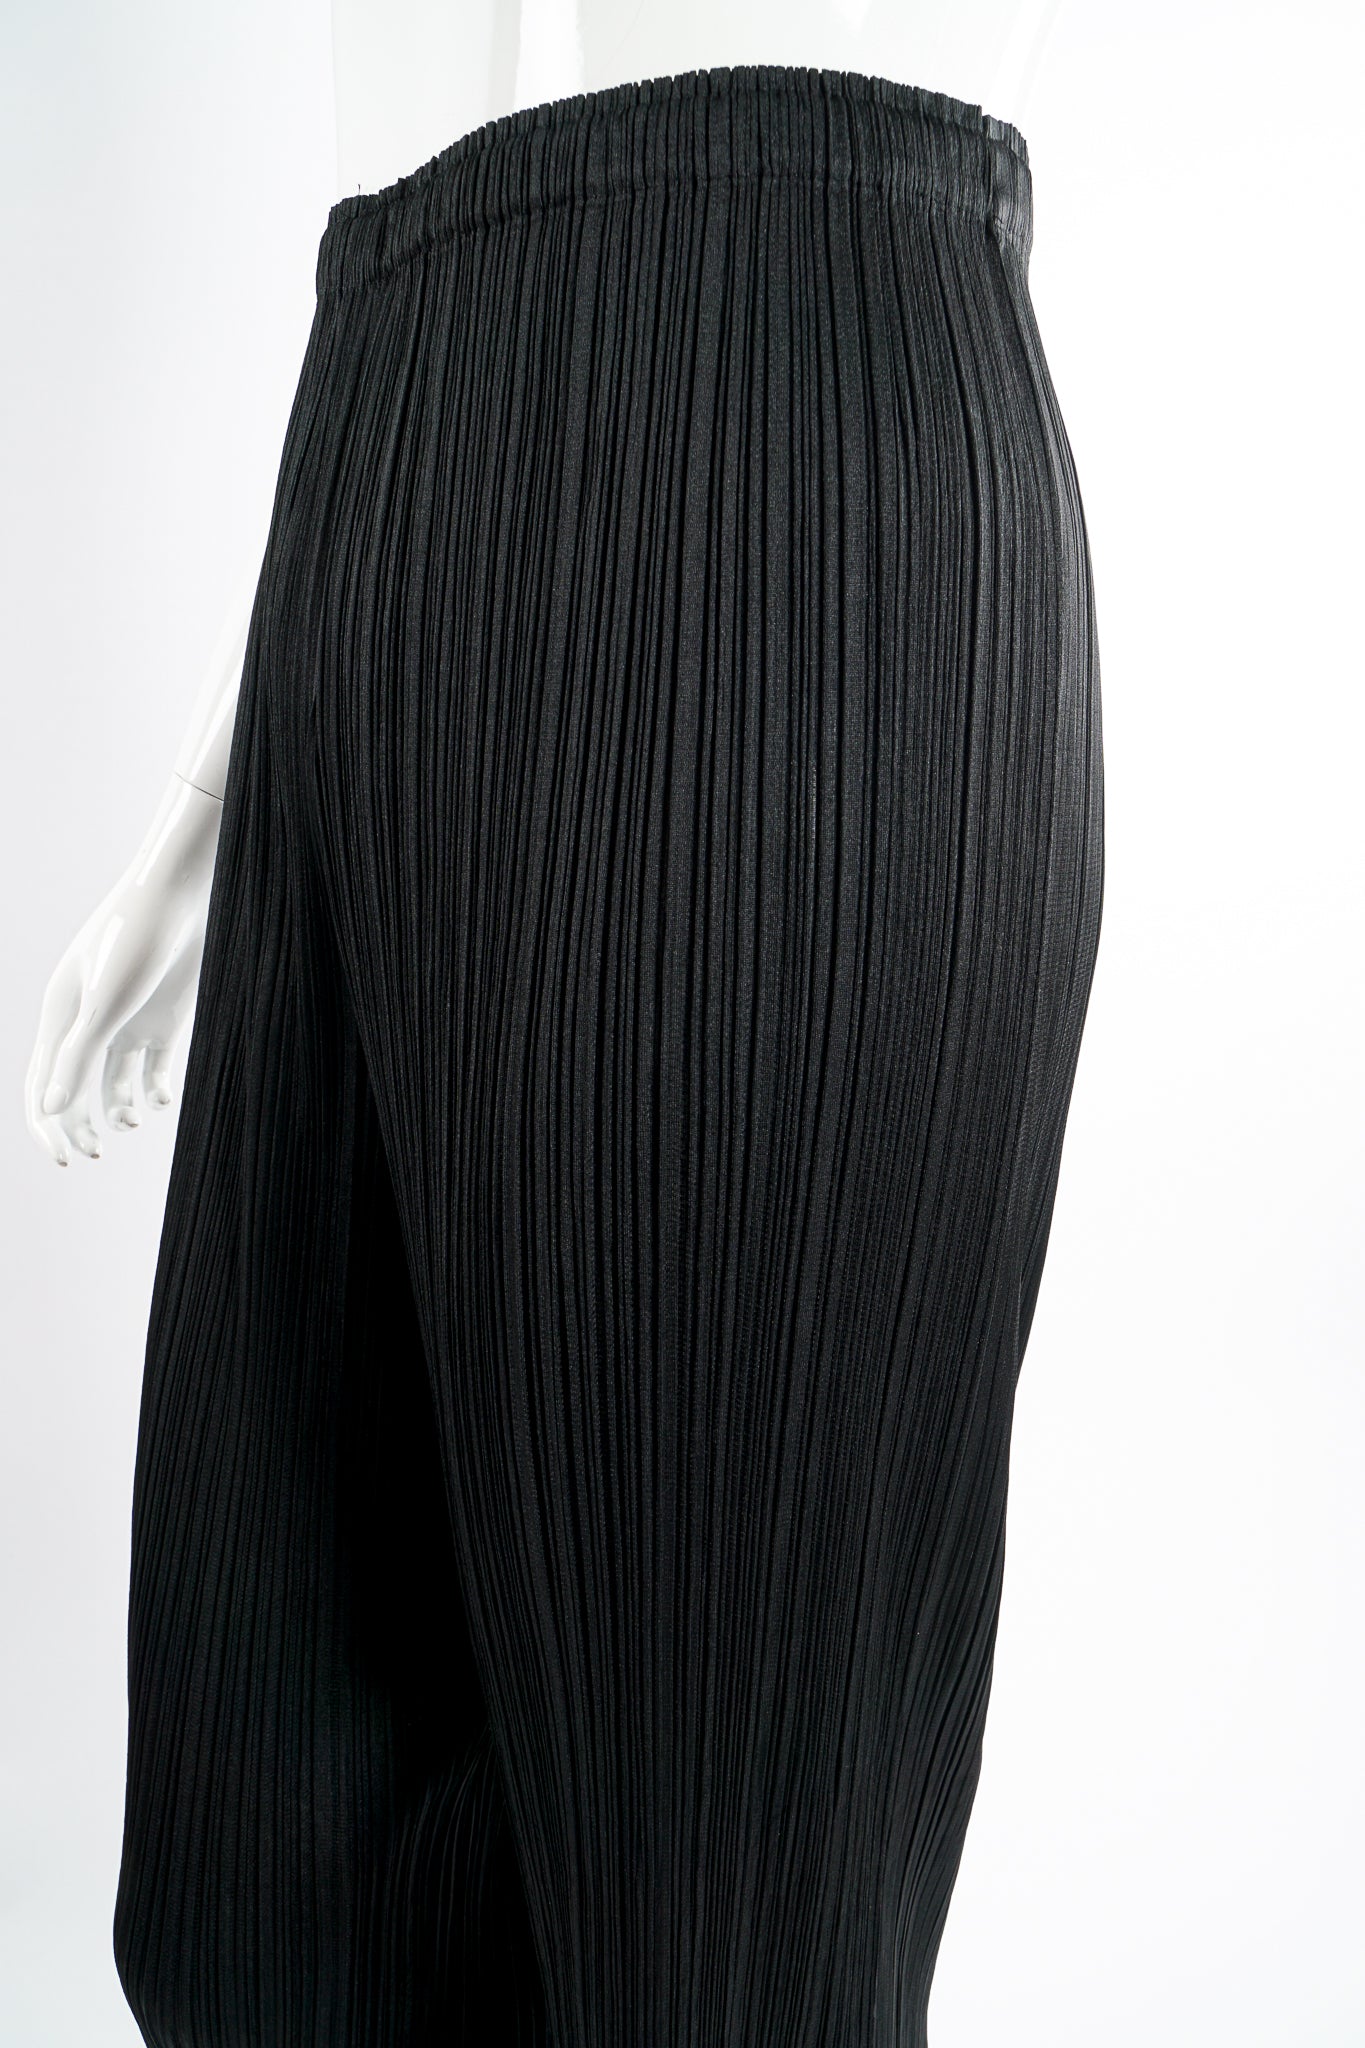 Vintage Issey Miyake Pleats Please Black Pleated Ankle Pant on Mannequin waist at Recess LA